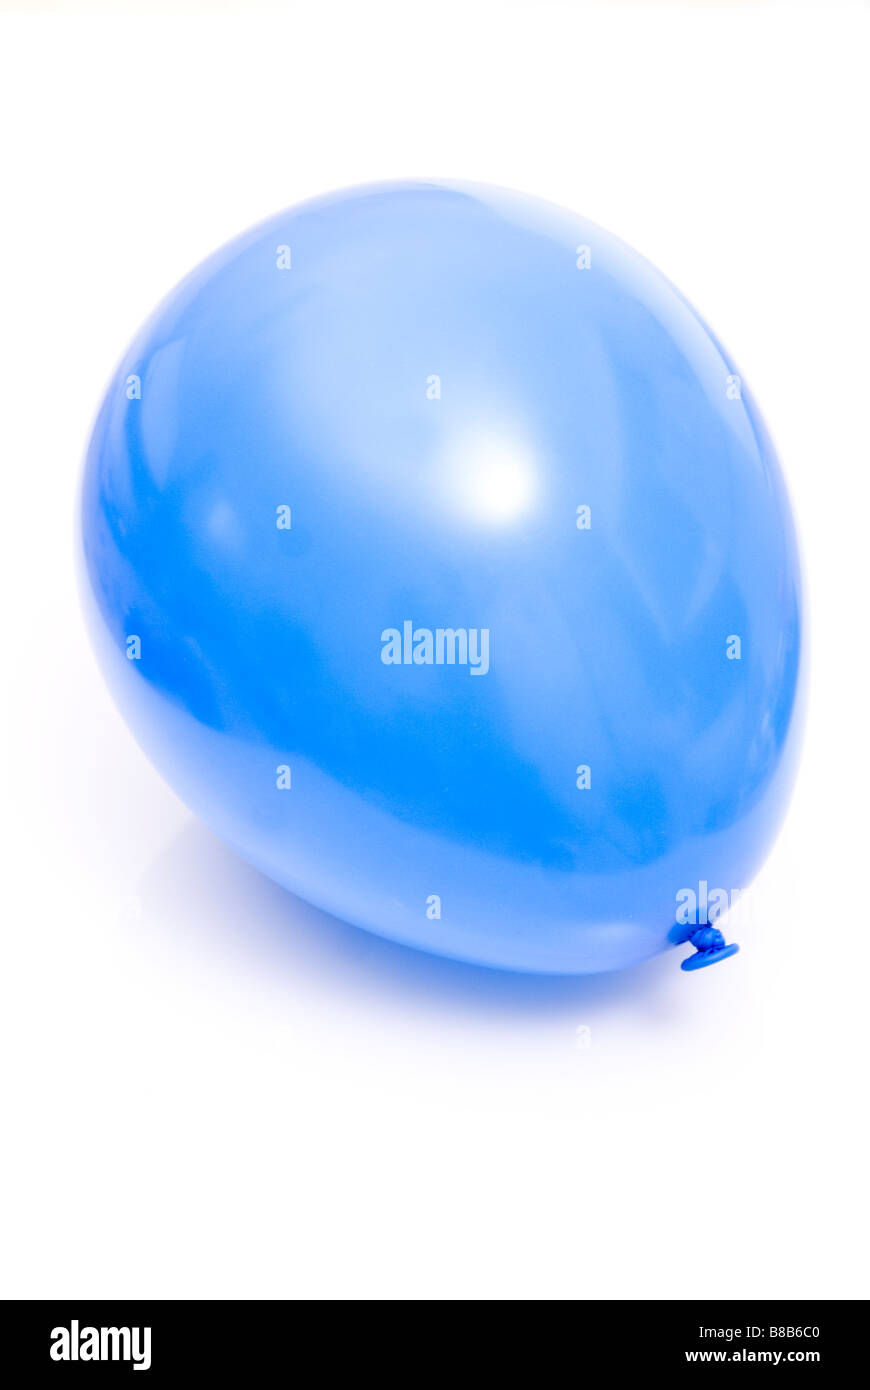 One blue balloon cutout on a white background Stock Photo